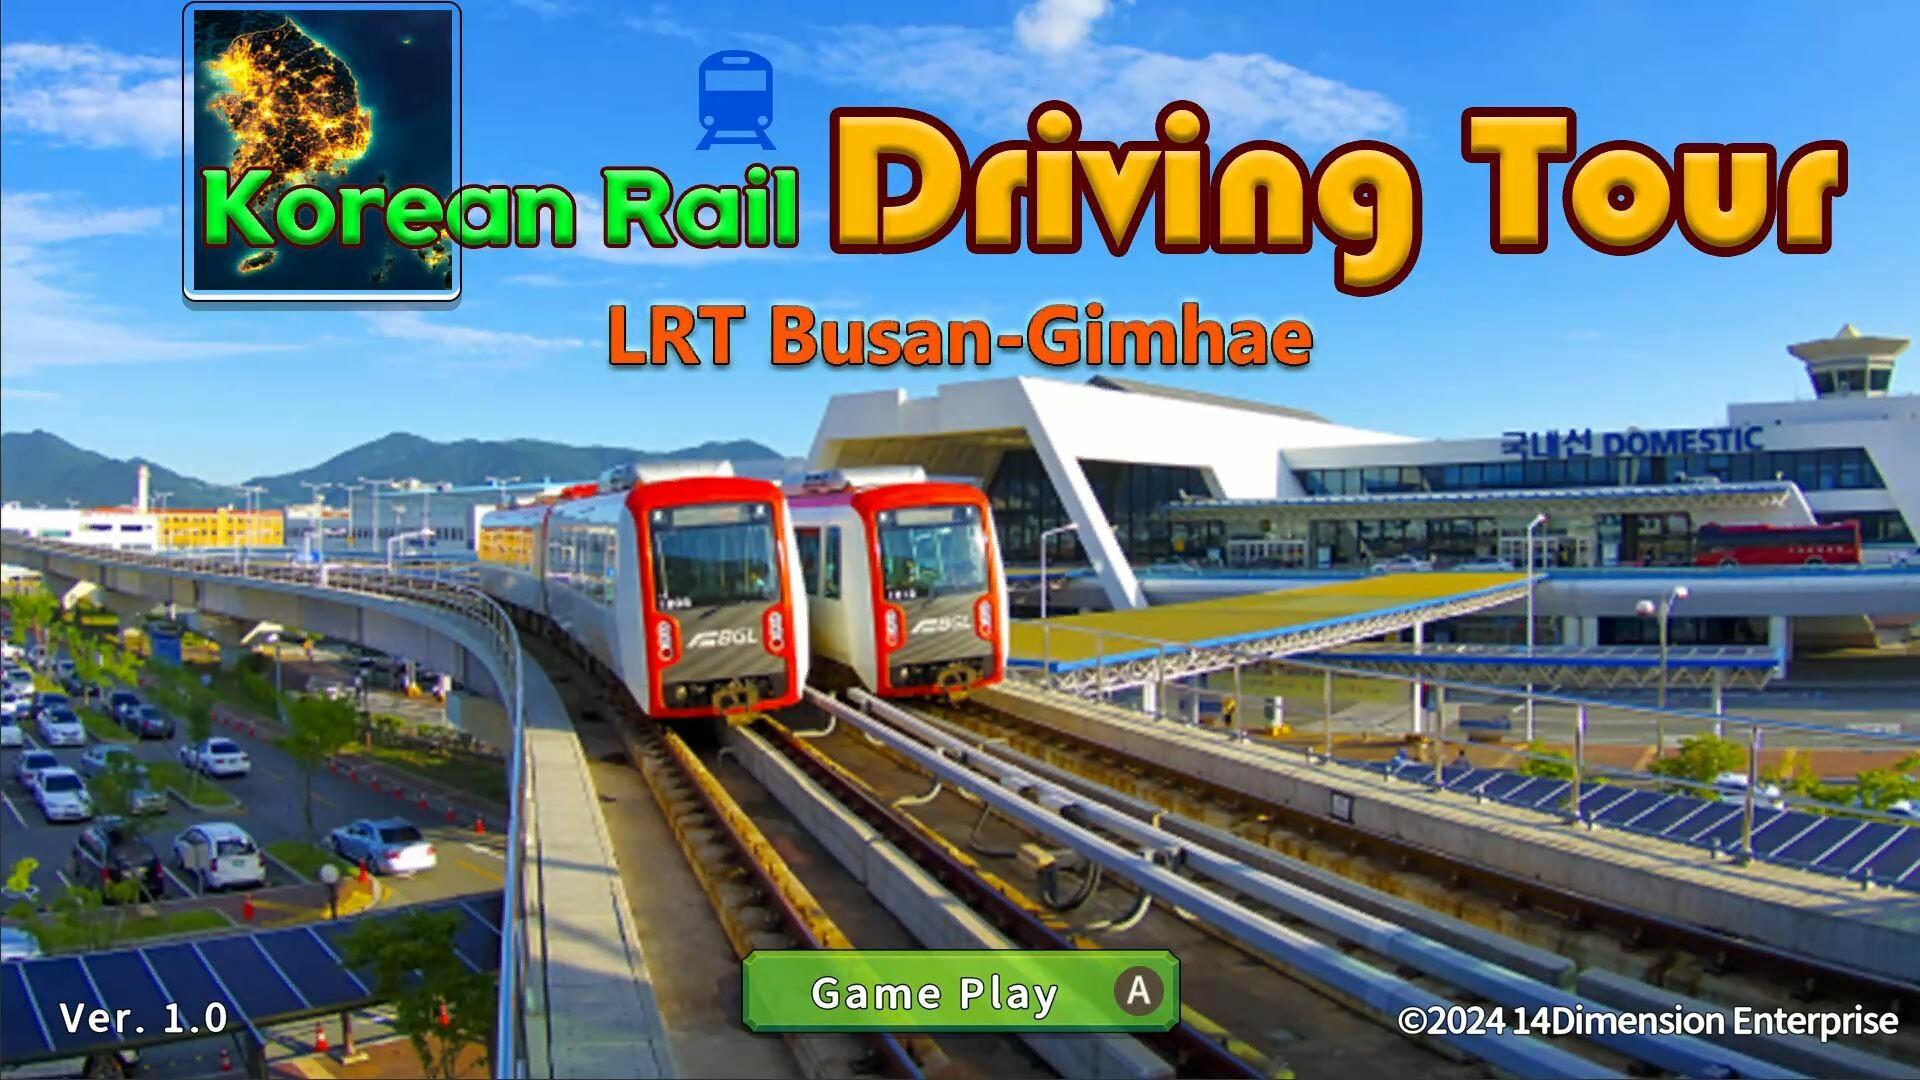 Korean Rail Driving Tour LRT Busan-Gimhaeのキャプチャ